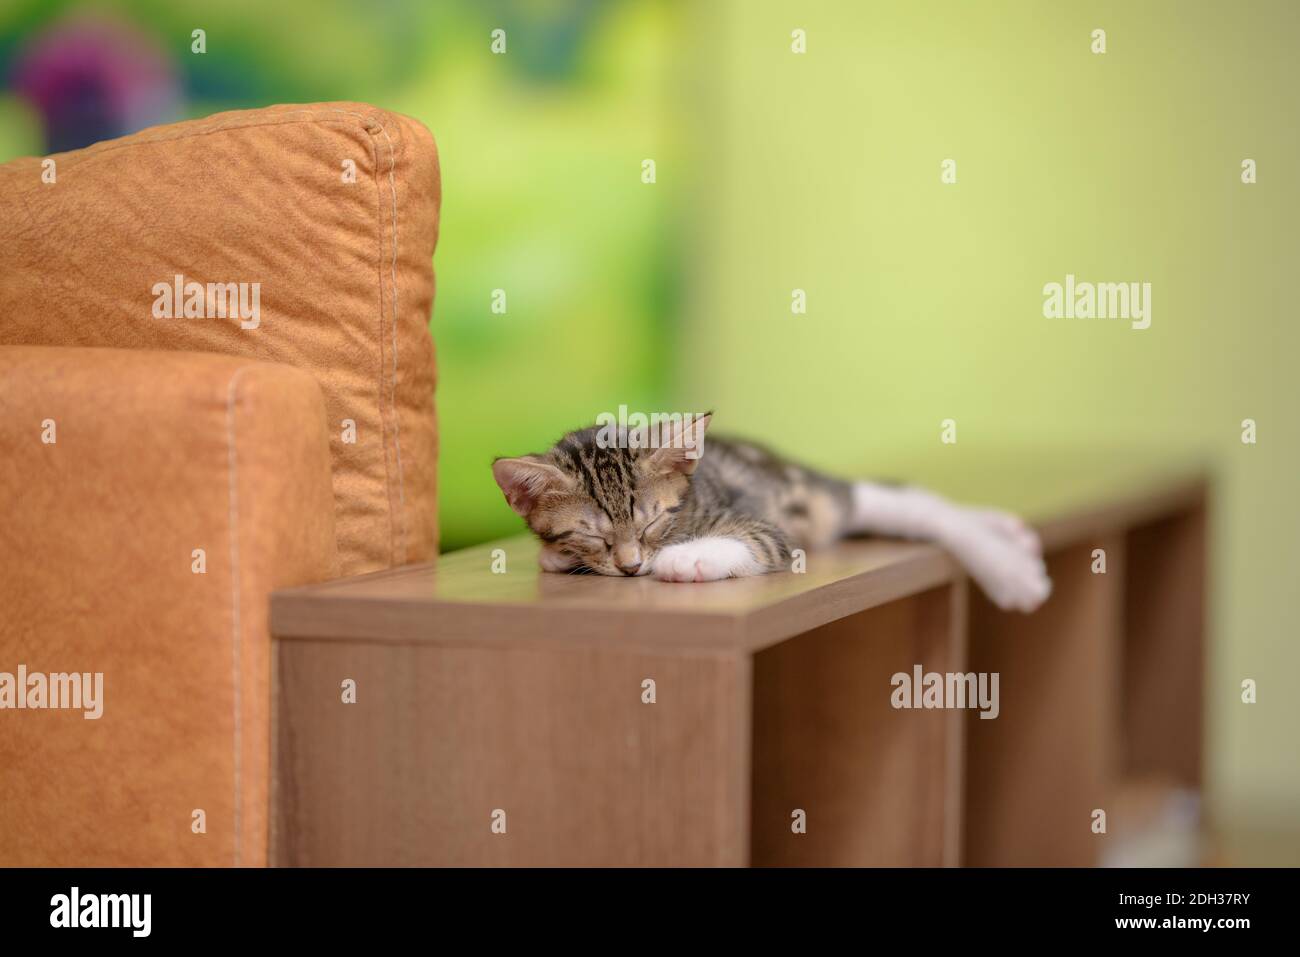 Tabby cat sleeping blurry background isolated Stock Photo